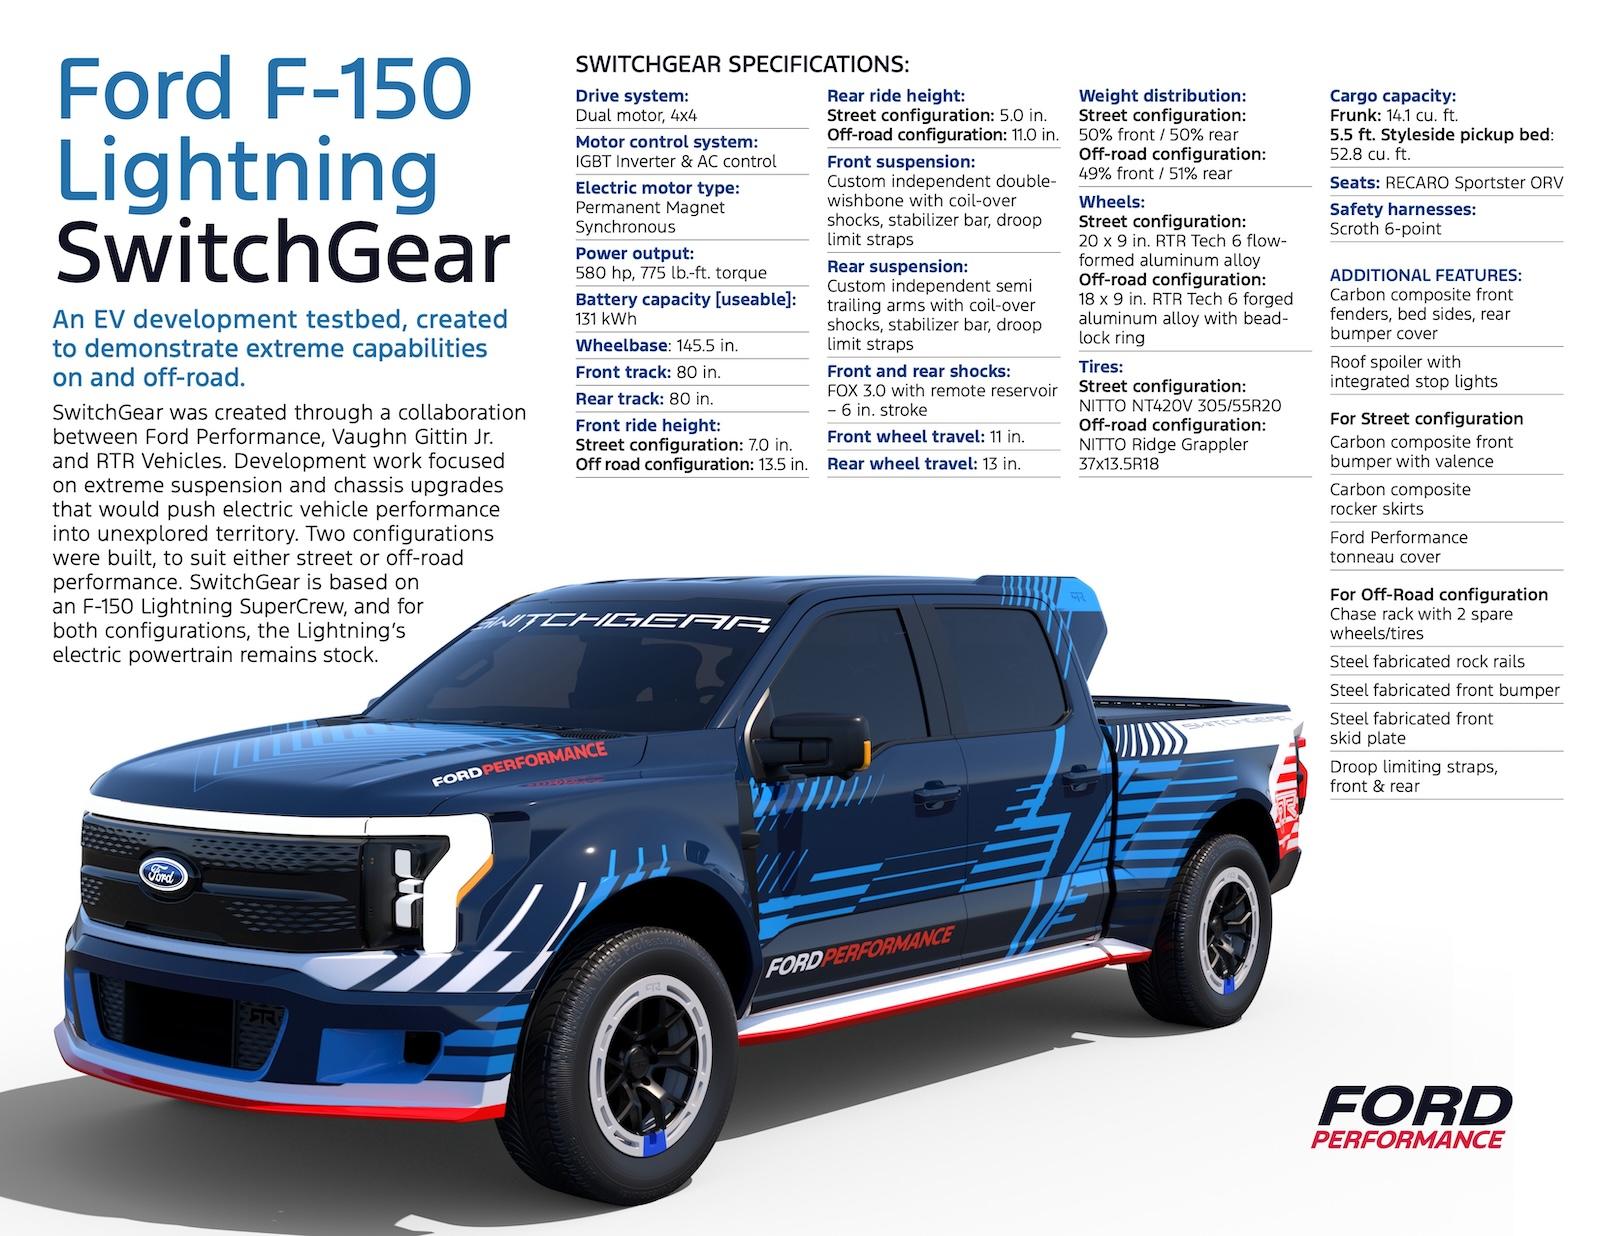 Ford F-150 Lightning F-150 Lightning Switchgear Off-Road Demonstrator Concept Revealed! Livestream TONIGHT @ 7PM EST F-150 Lightning Switchgear Tech Card